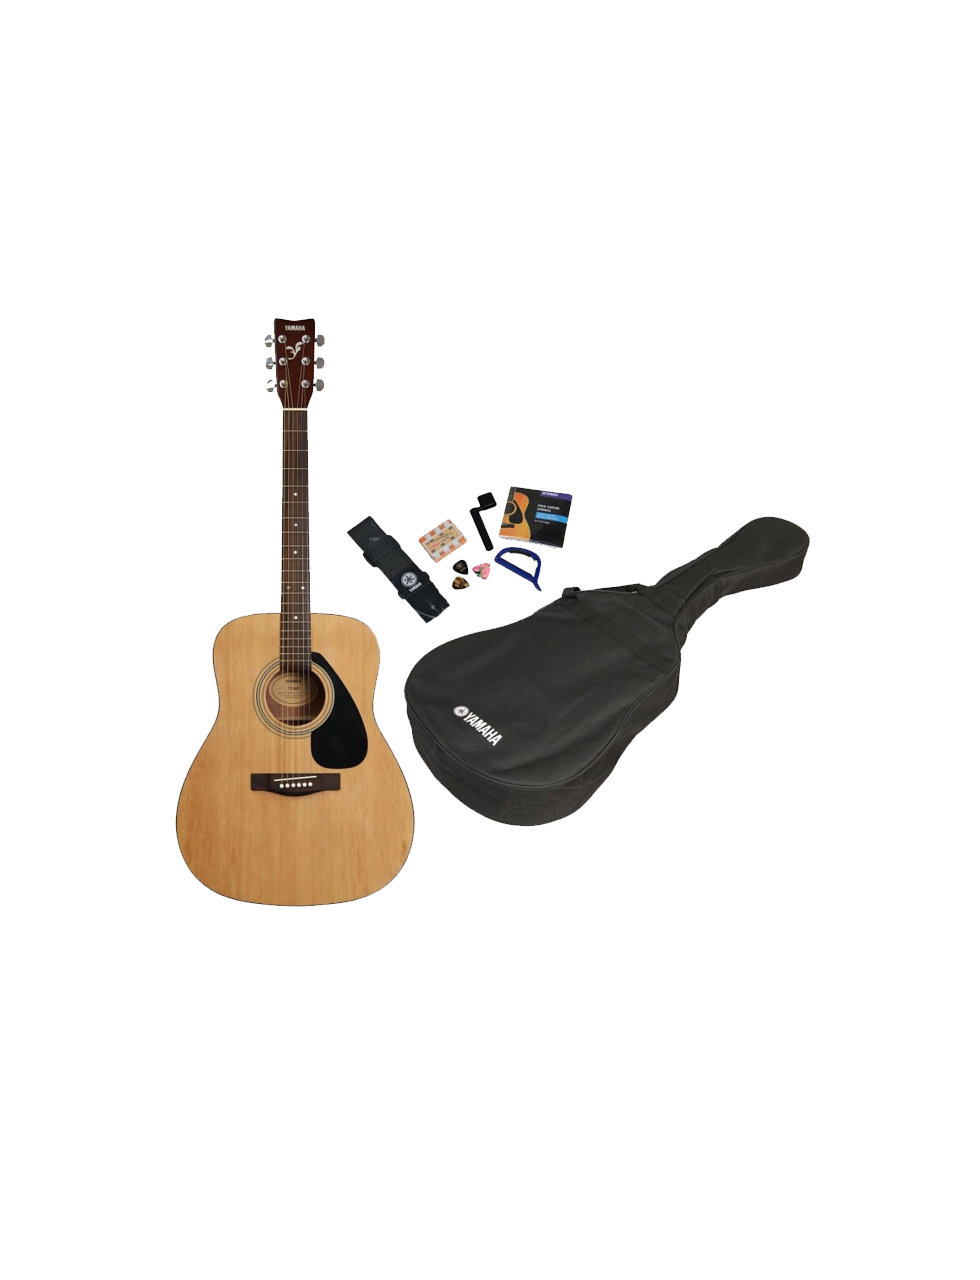 Yamaha-Guitar-Acoustic-F310P.png